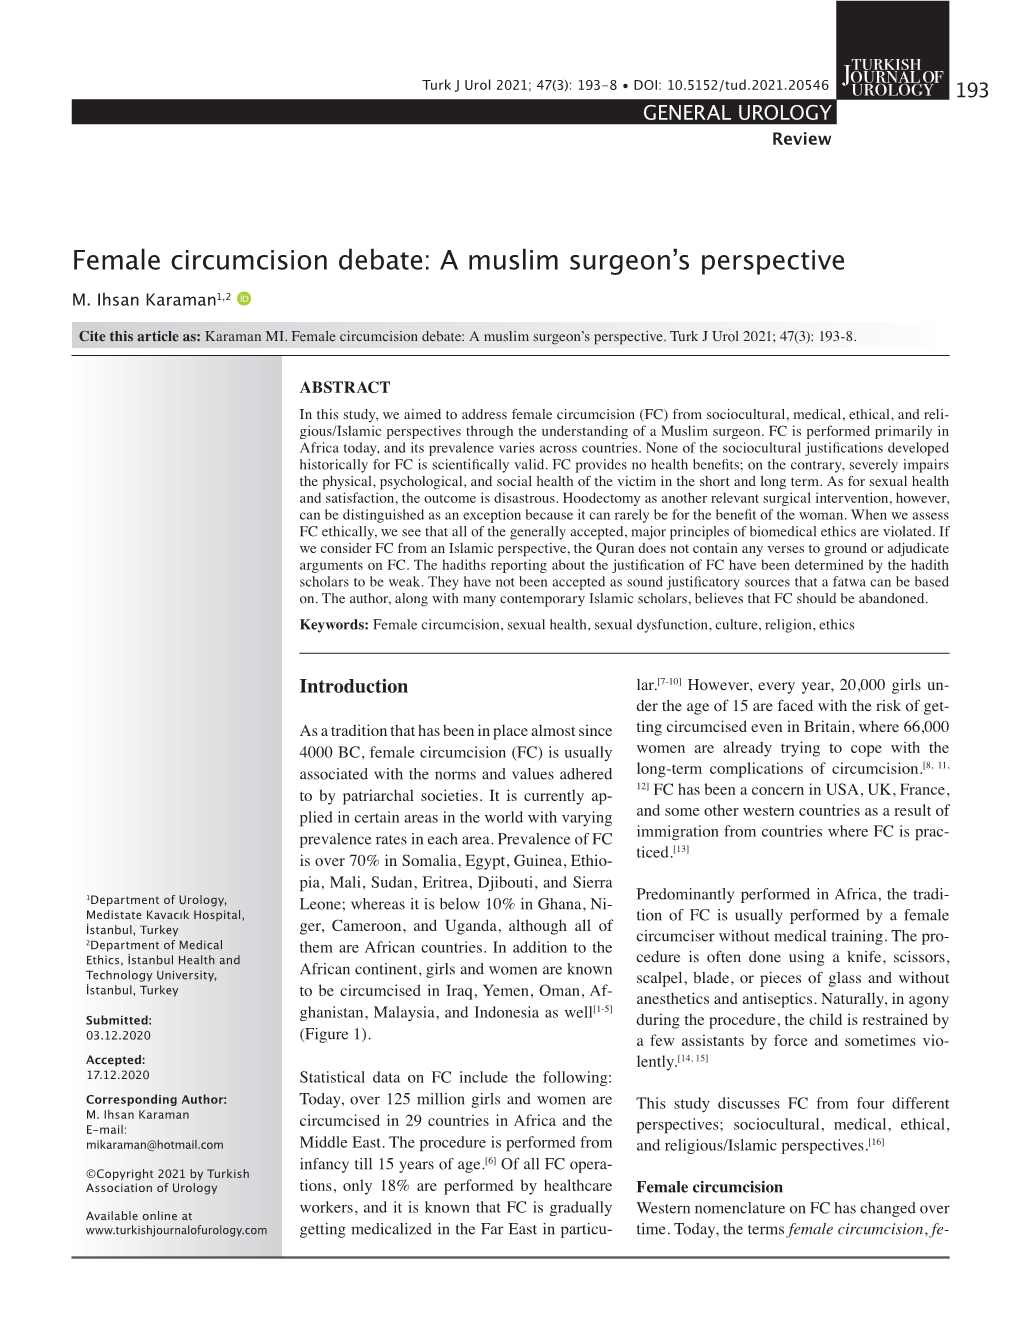 Female Circumcision Debate: a Muslim Surgeon’S Perspective M